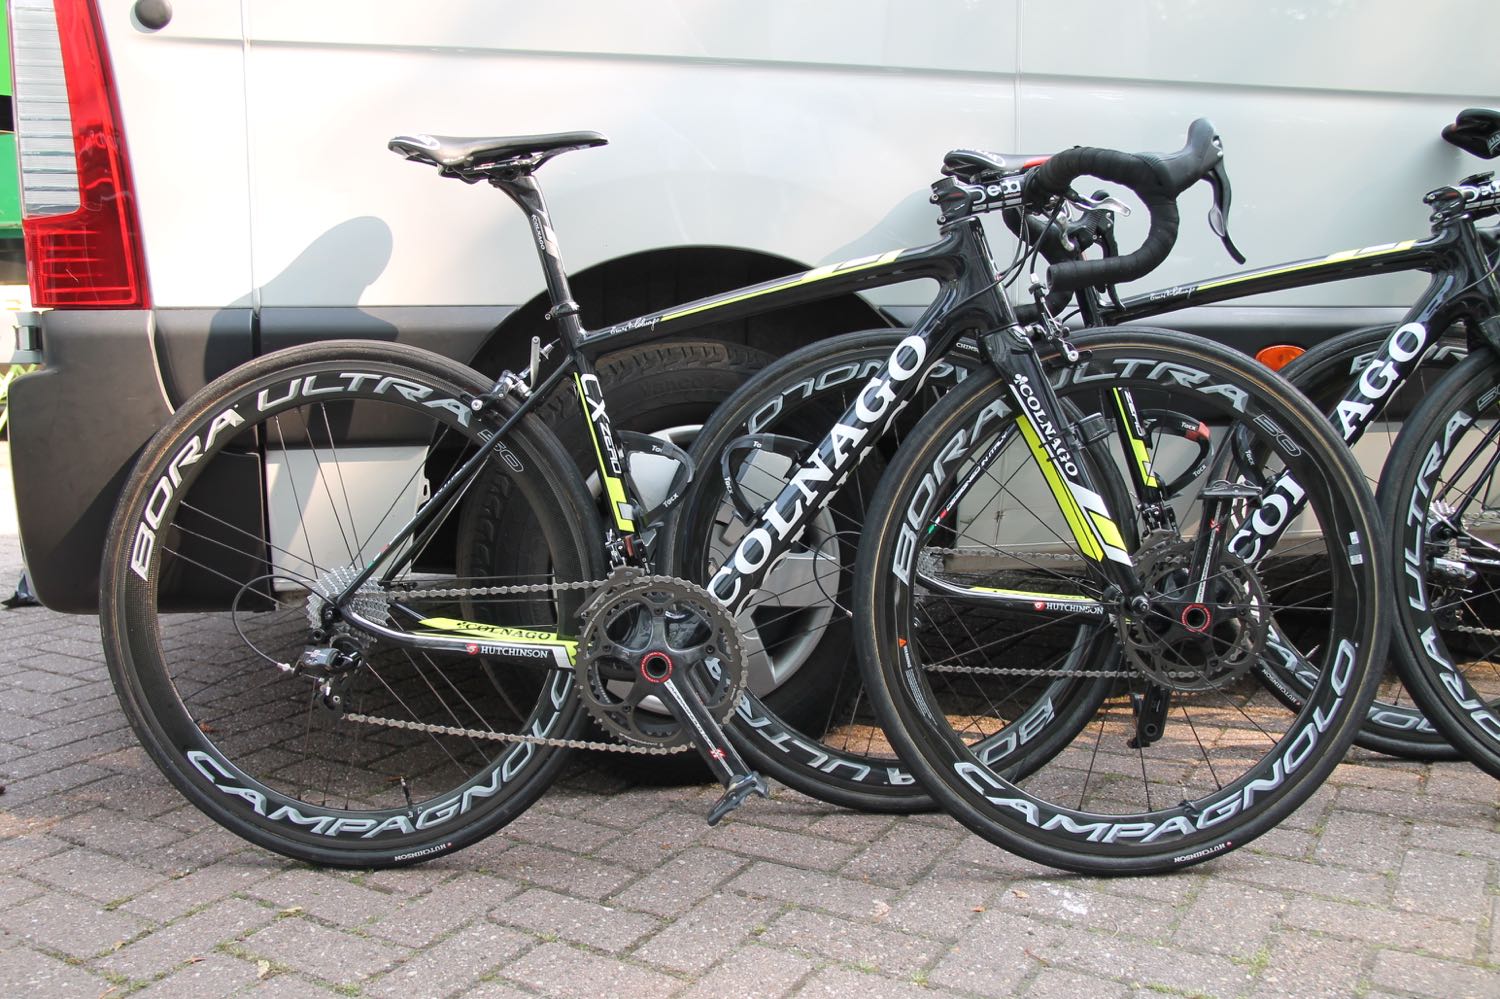 Tour de France Bikes 2015: Special bikes, suspension and wider tyres